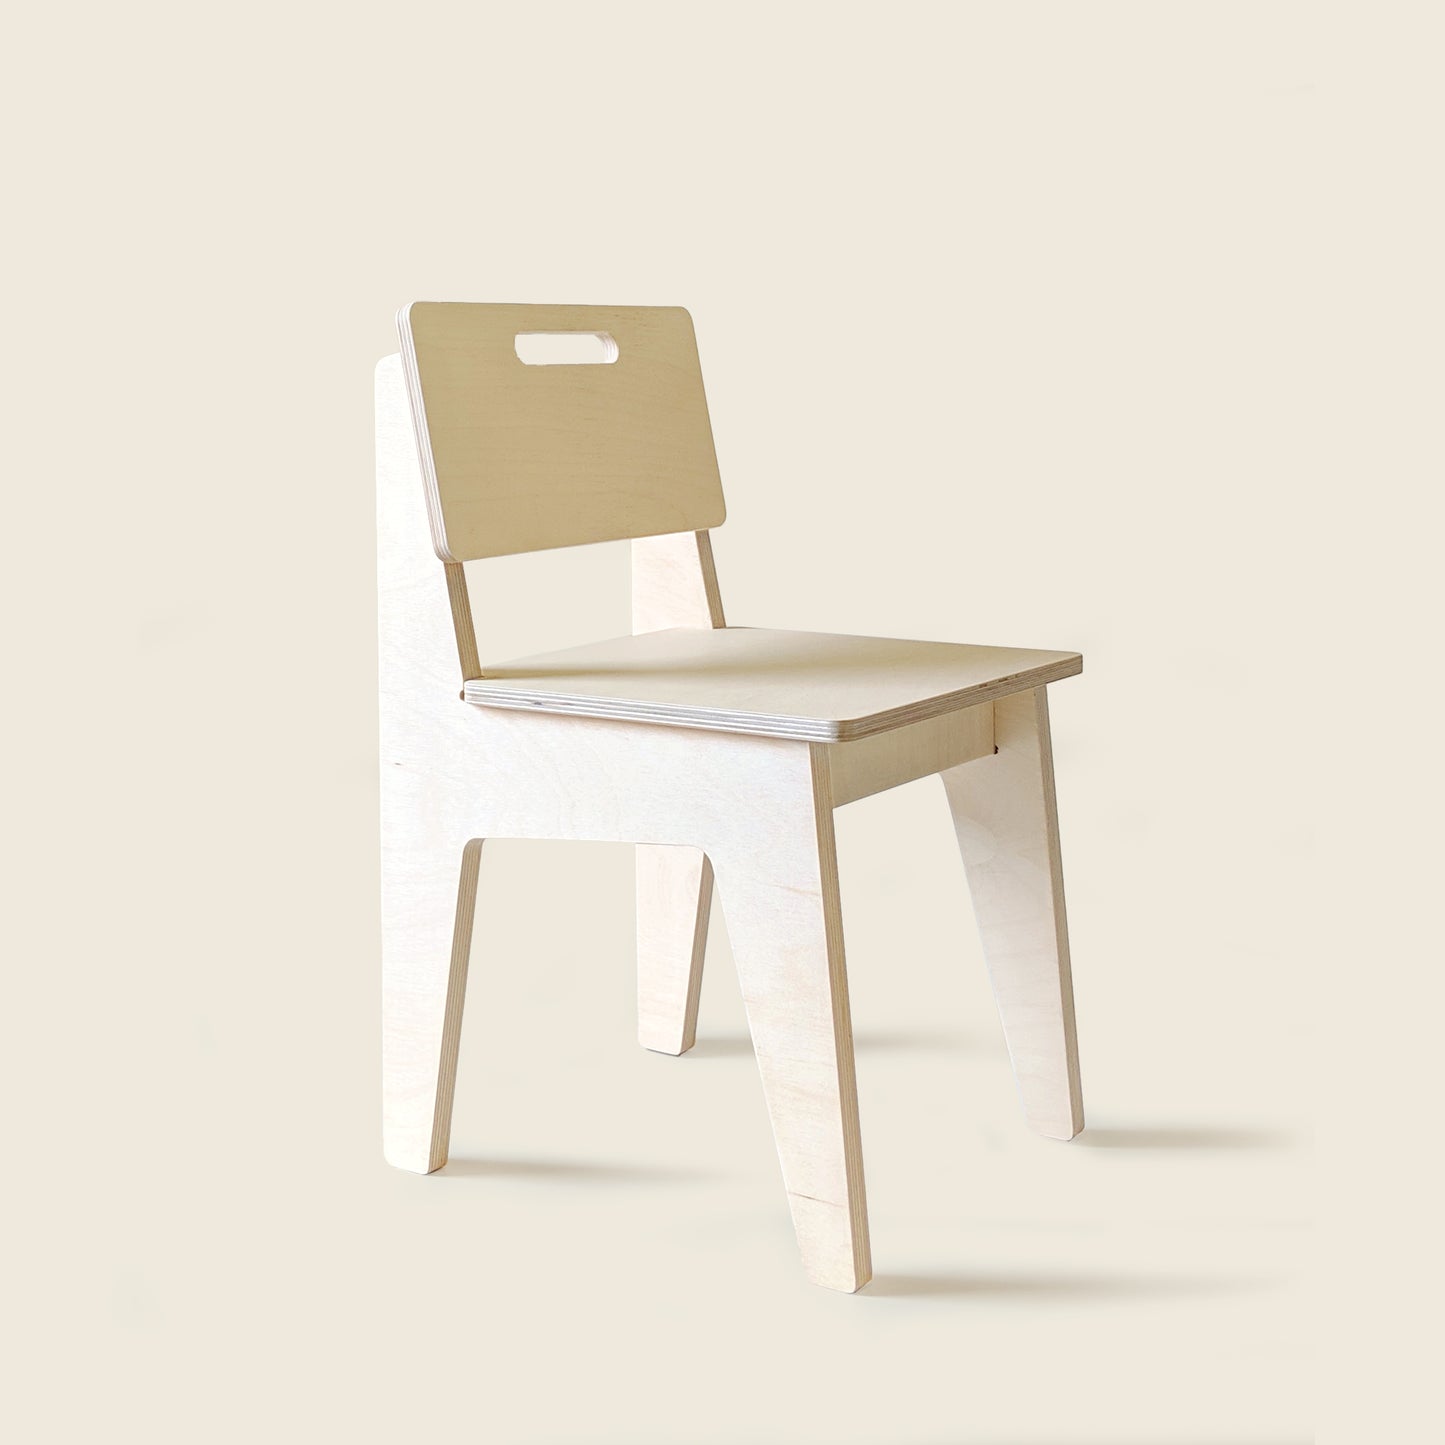 STUDY - Draw & Seat : Wooden Desk & Chair Set by Mapayah